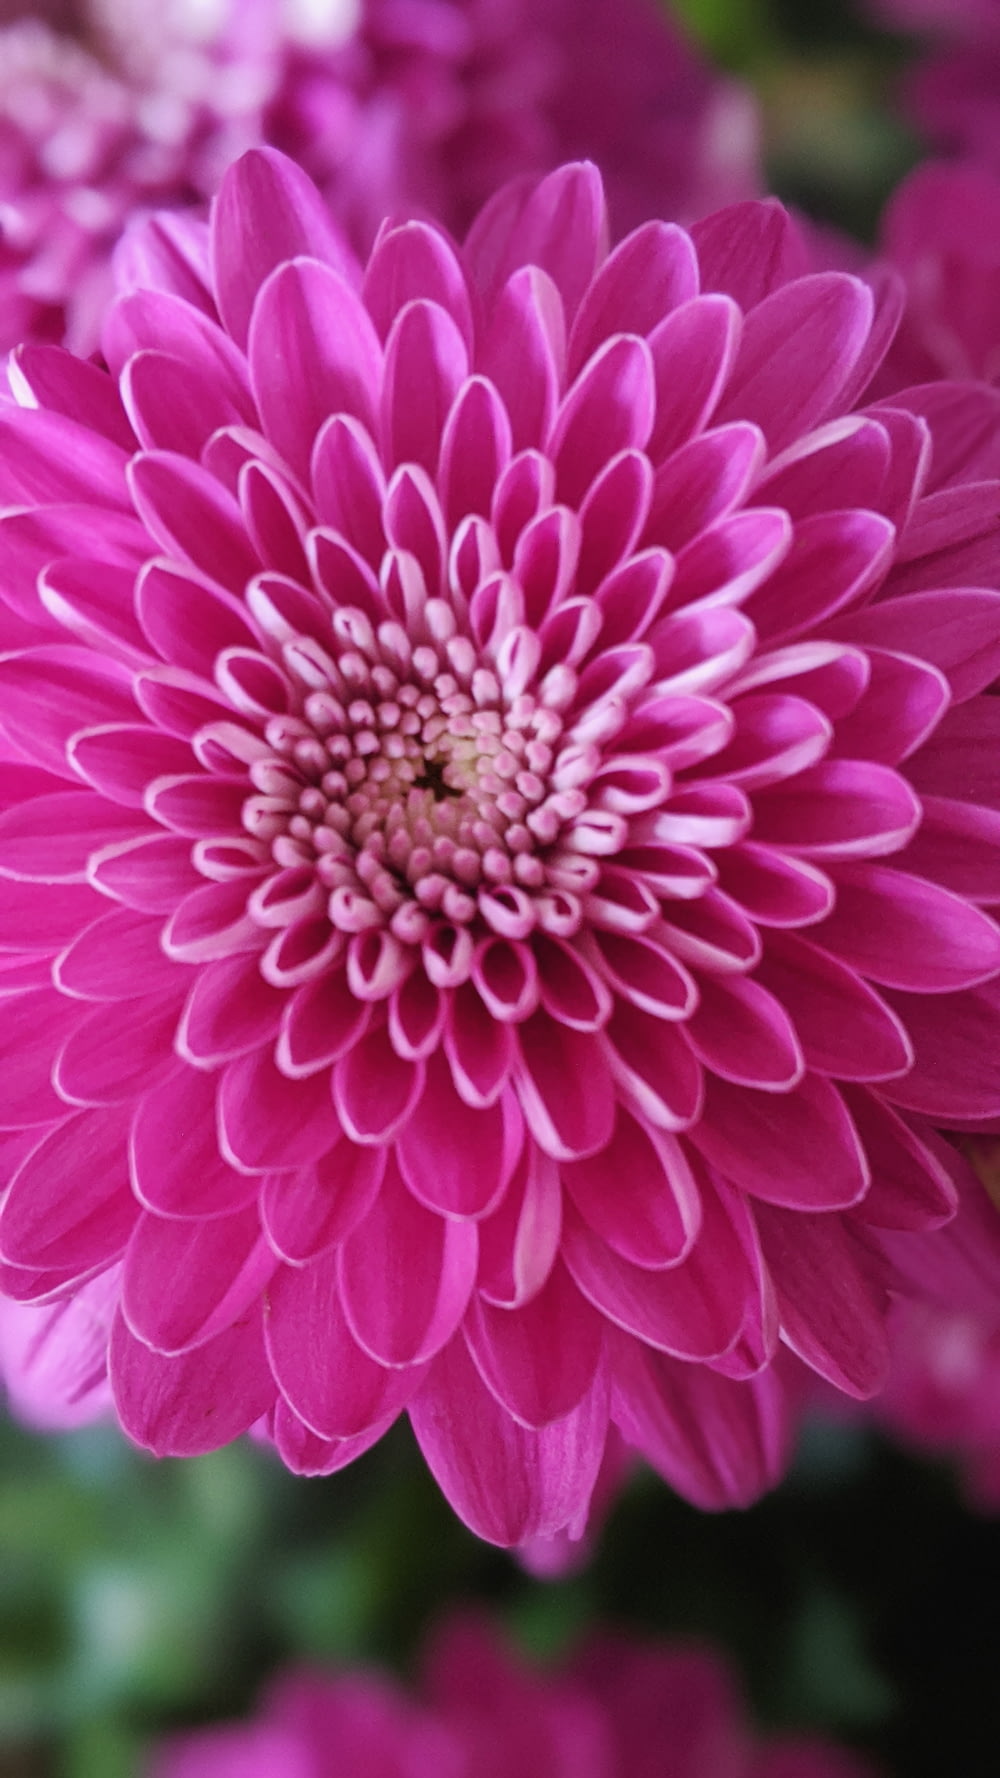 focus photography of pink chrysanthemum